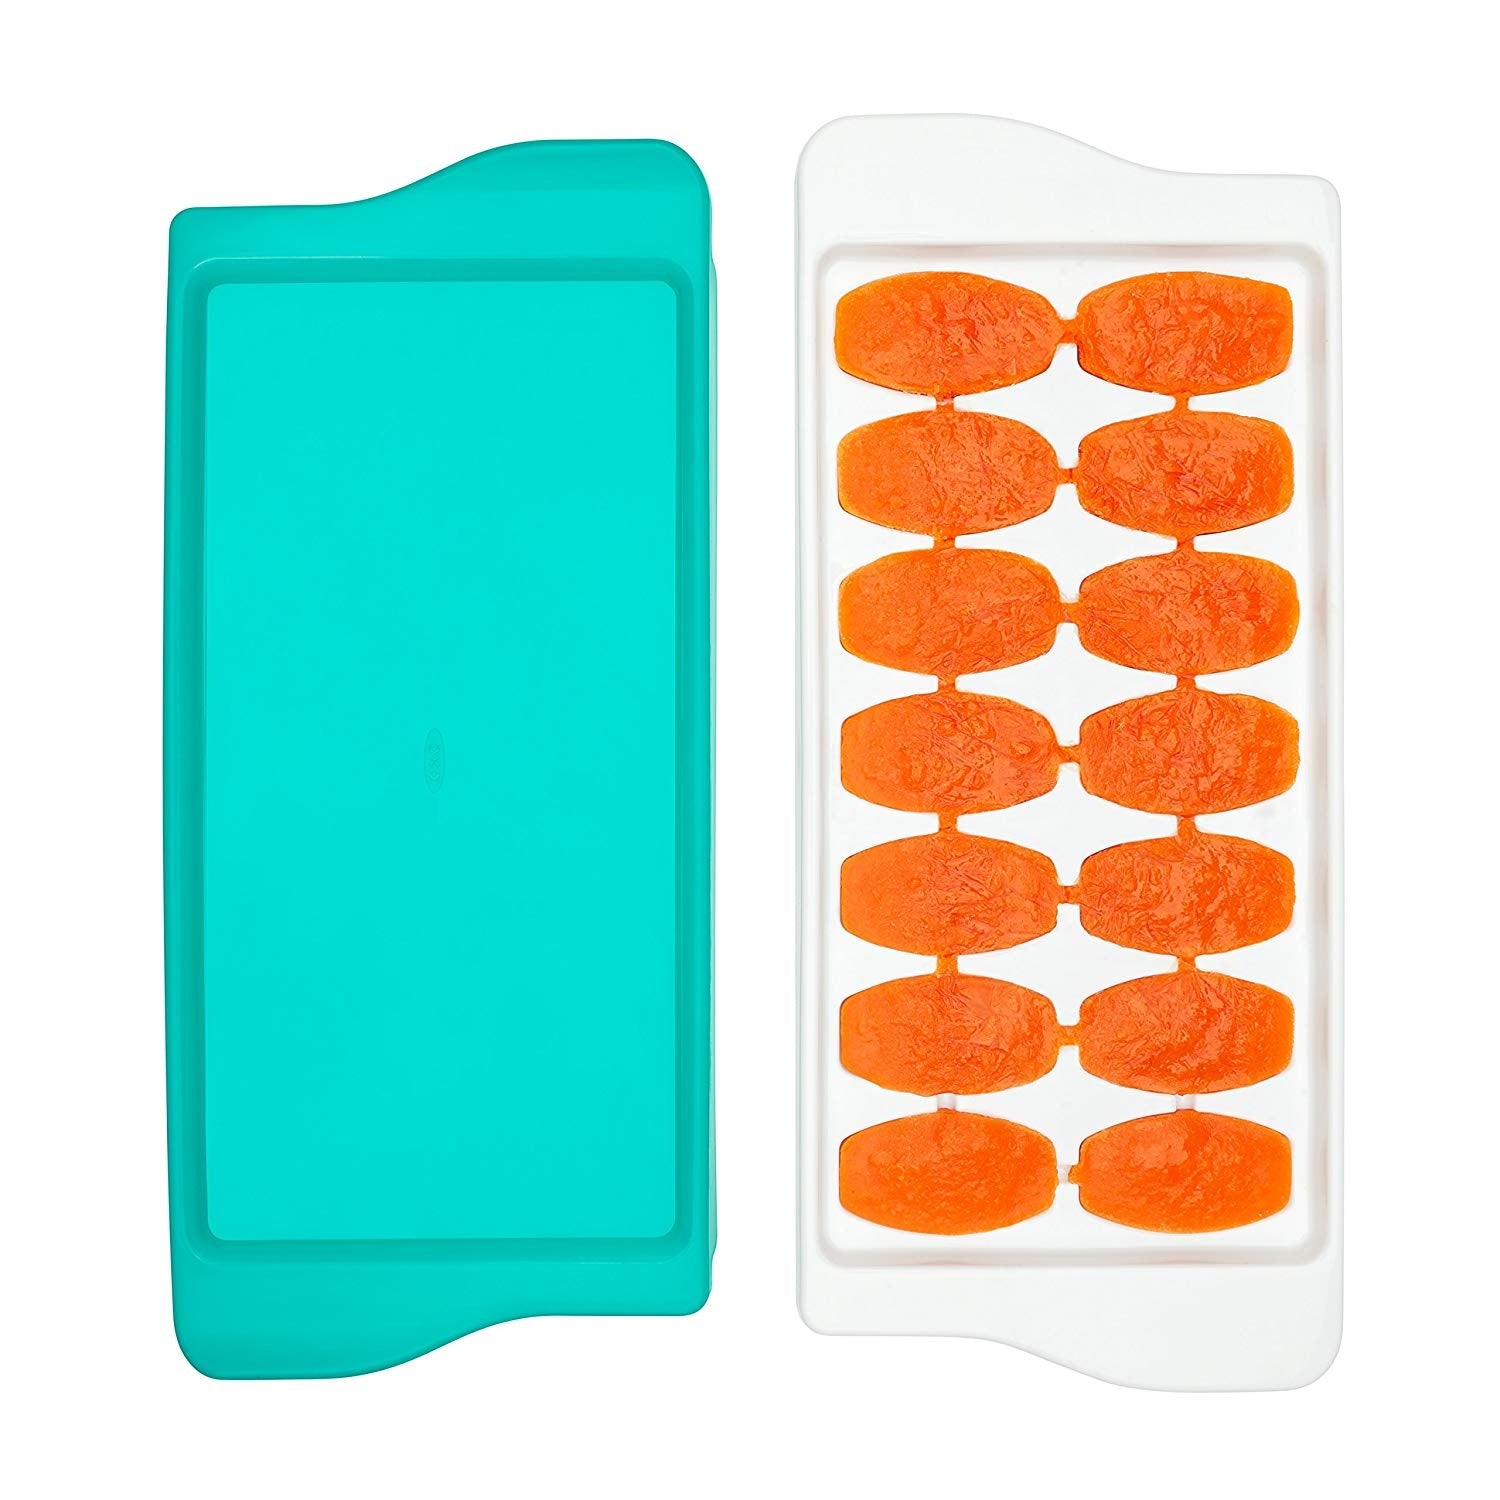 Baby Food Freezer Tray - Teal uniq